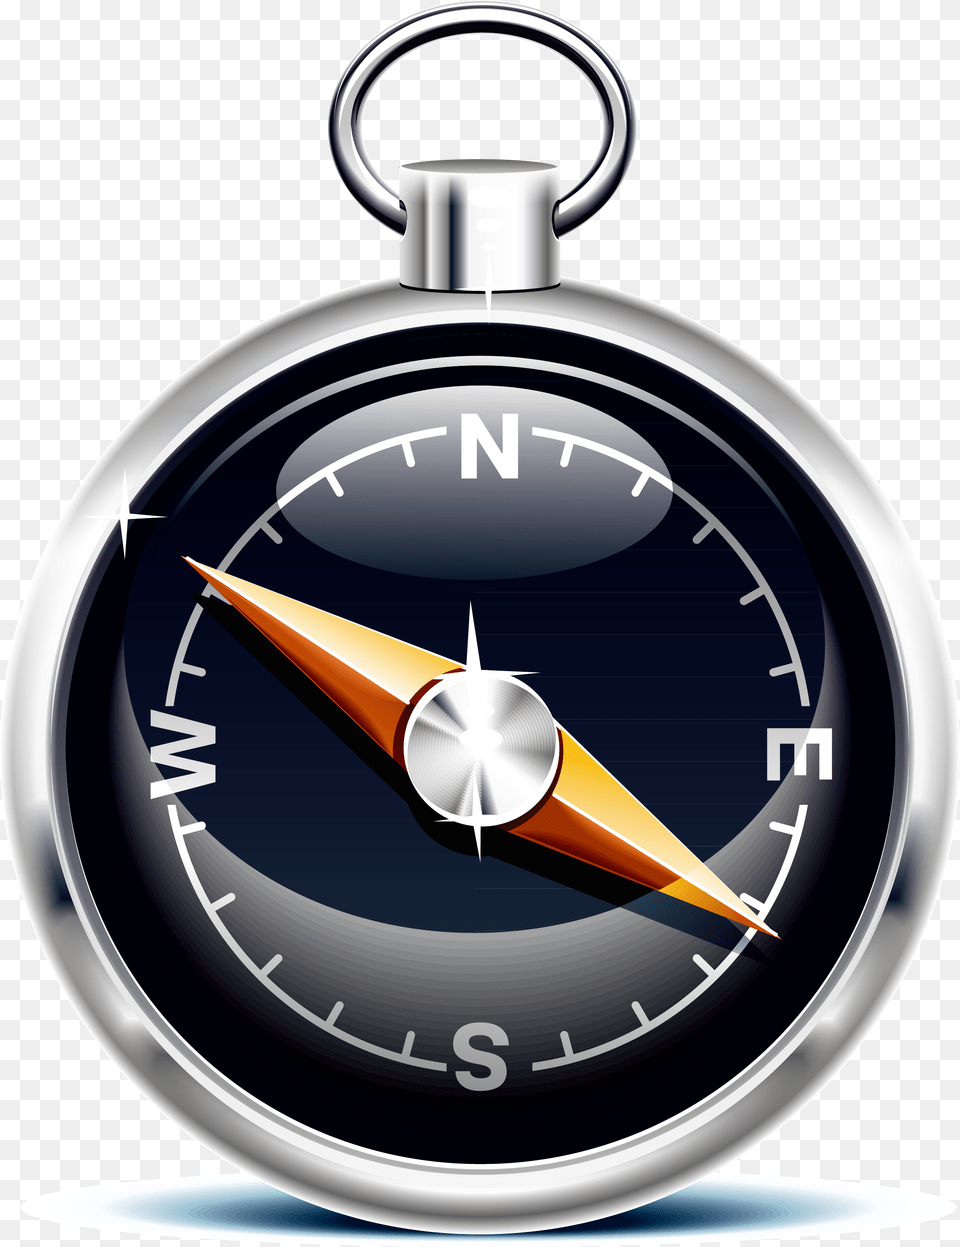 North Compass Clip Art Magnetic Compass Clip Art Png Image